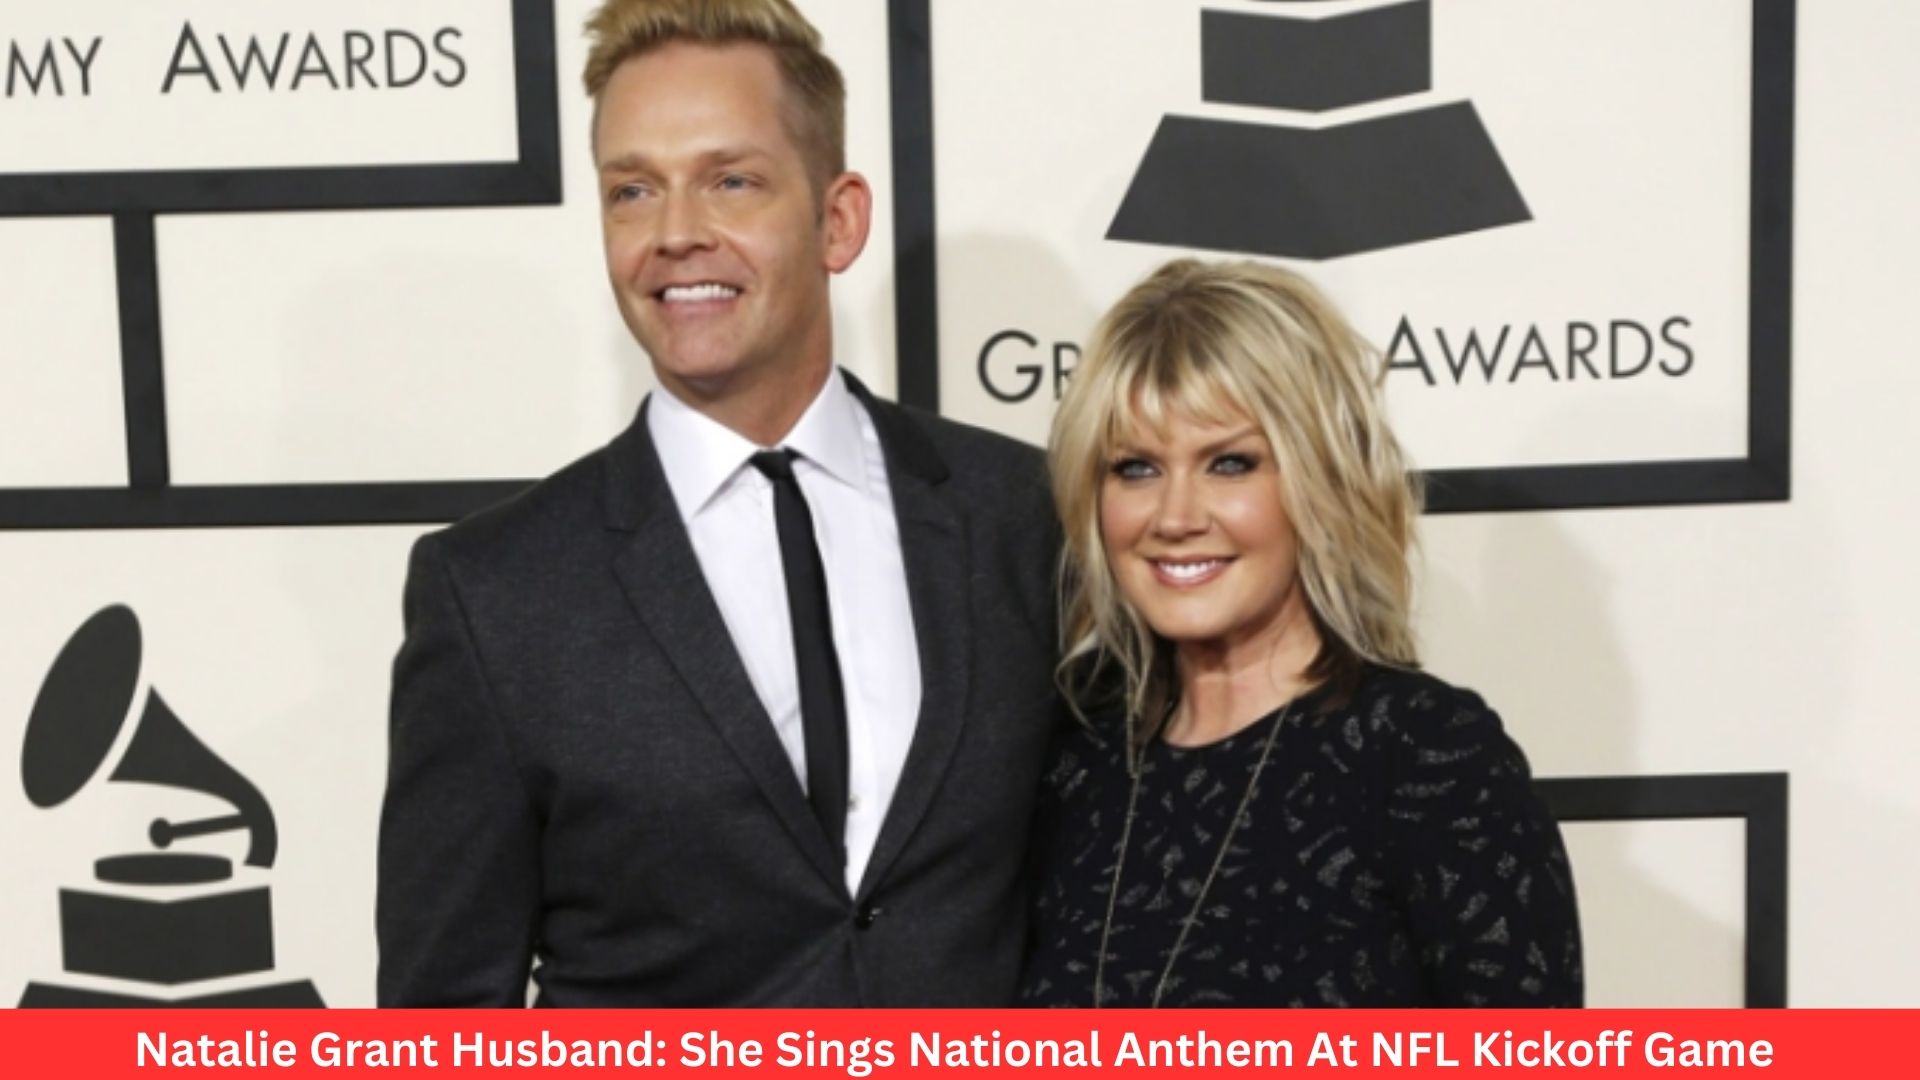 Natalie Grant Husband: She Sings National Anthem At NFL Kickoff Game